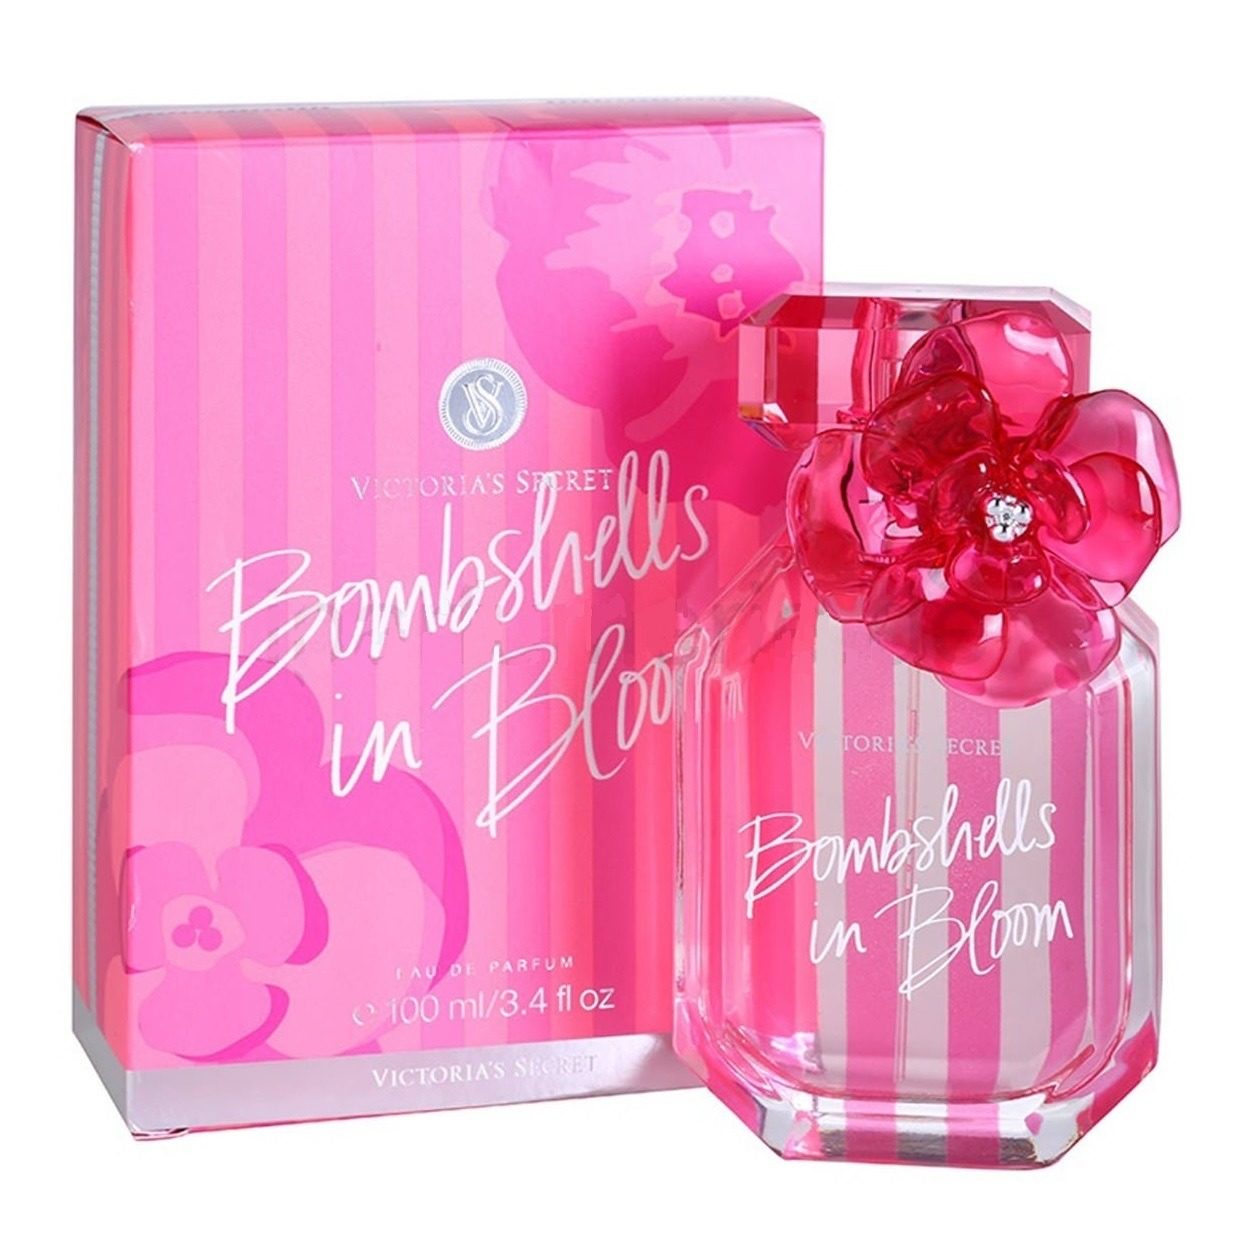 bombshells in bloom perfume